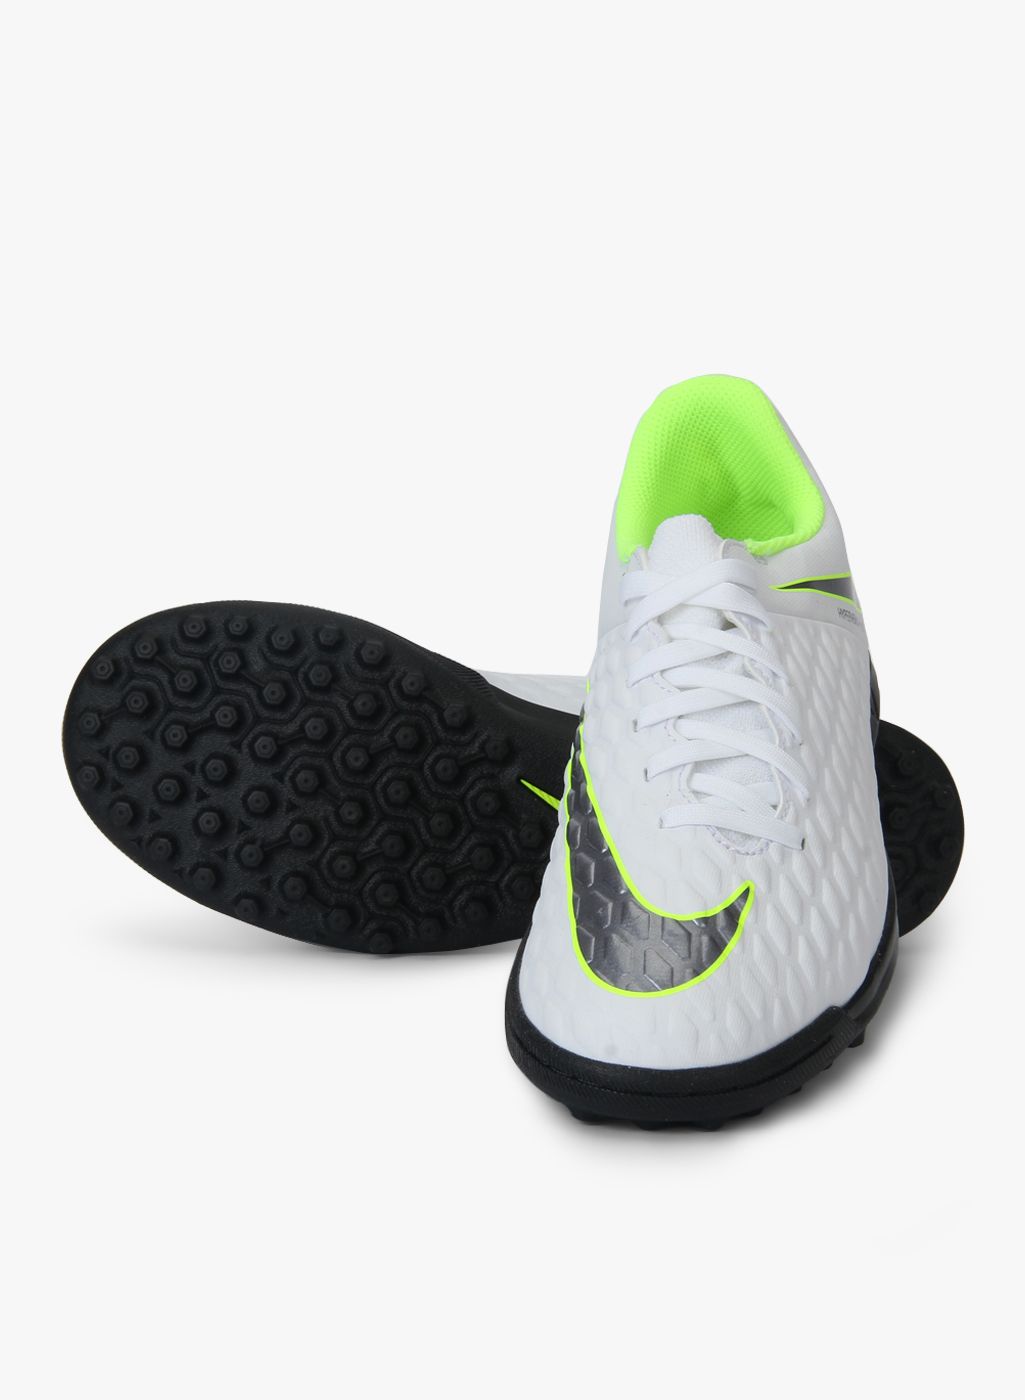 New Nike HypervenomX Finale II IC Indoor Turf Soccer Shoes